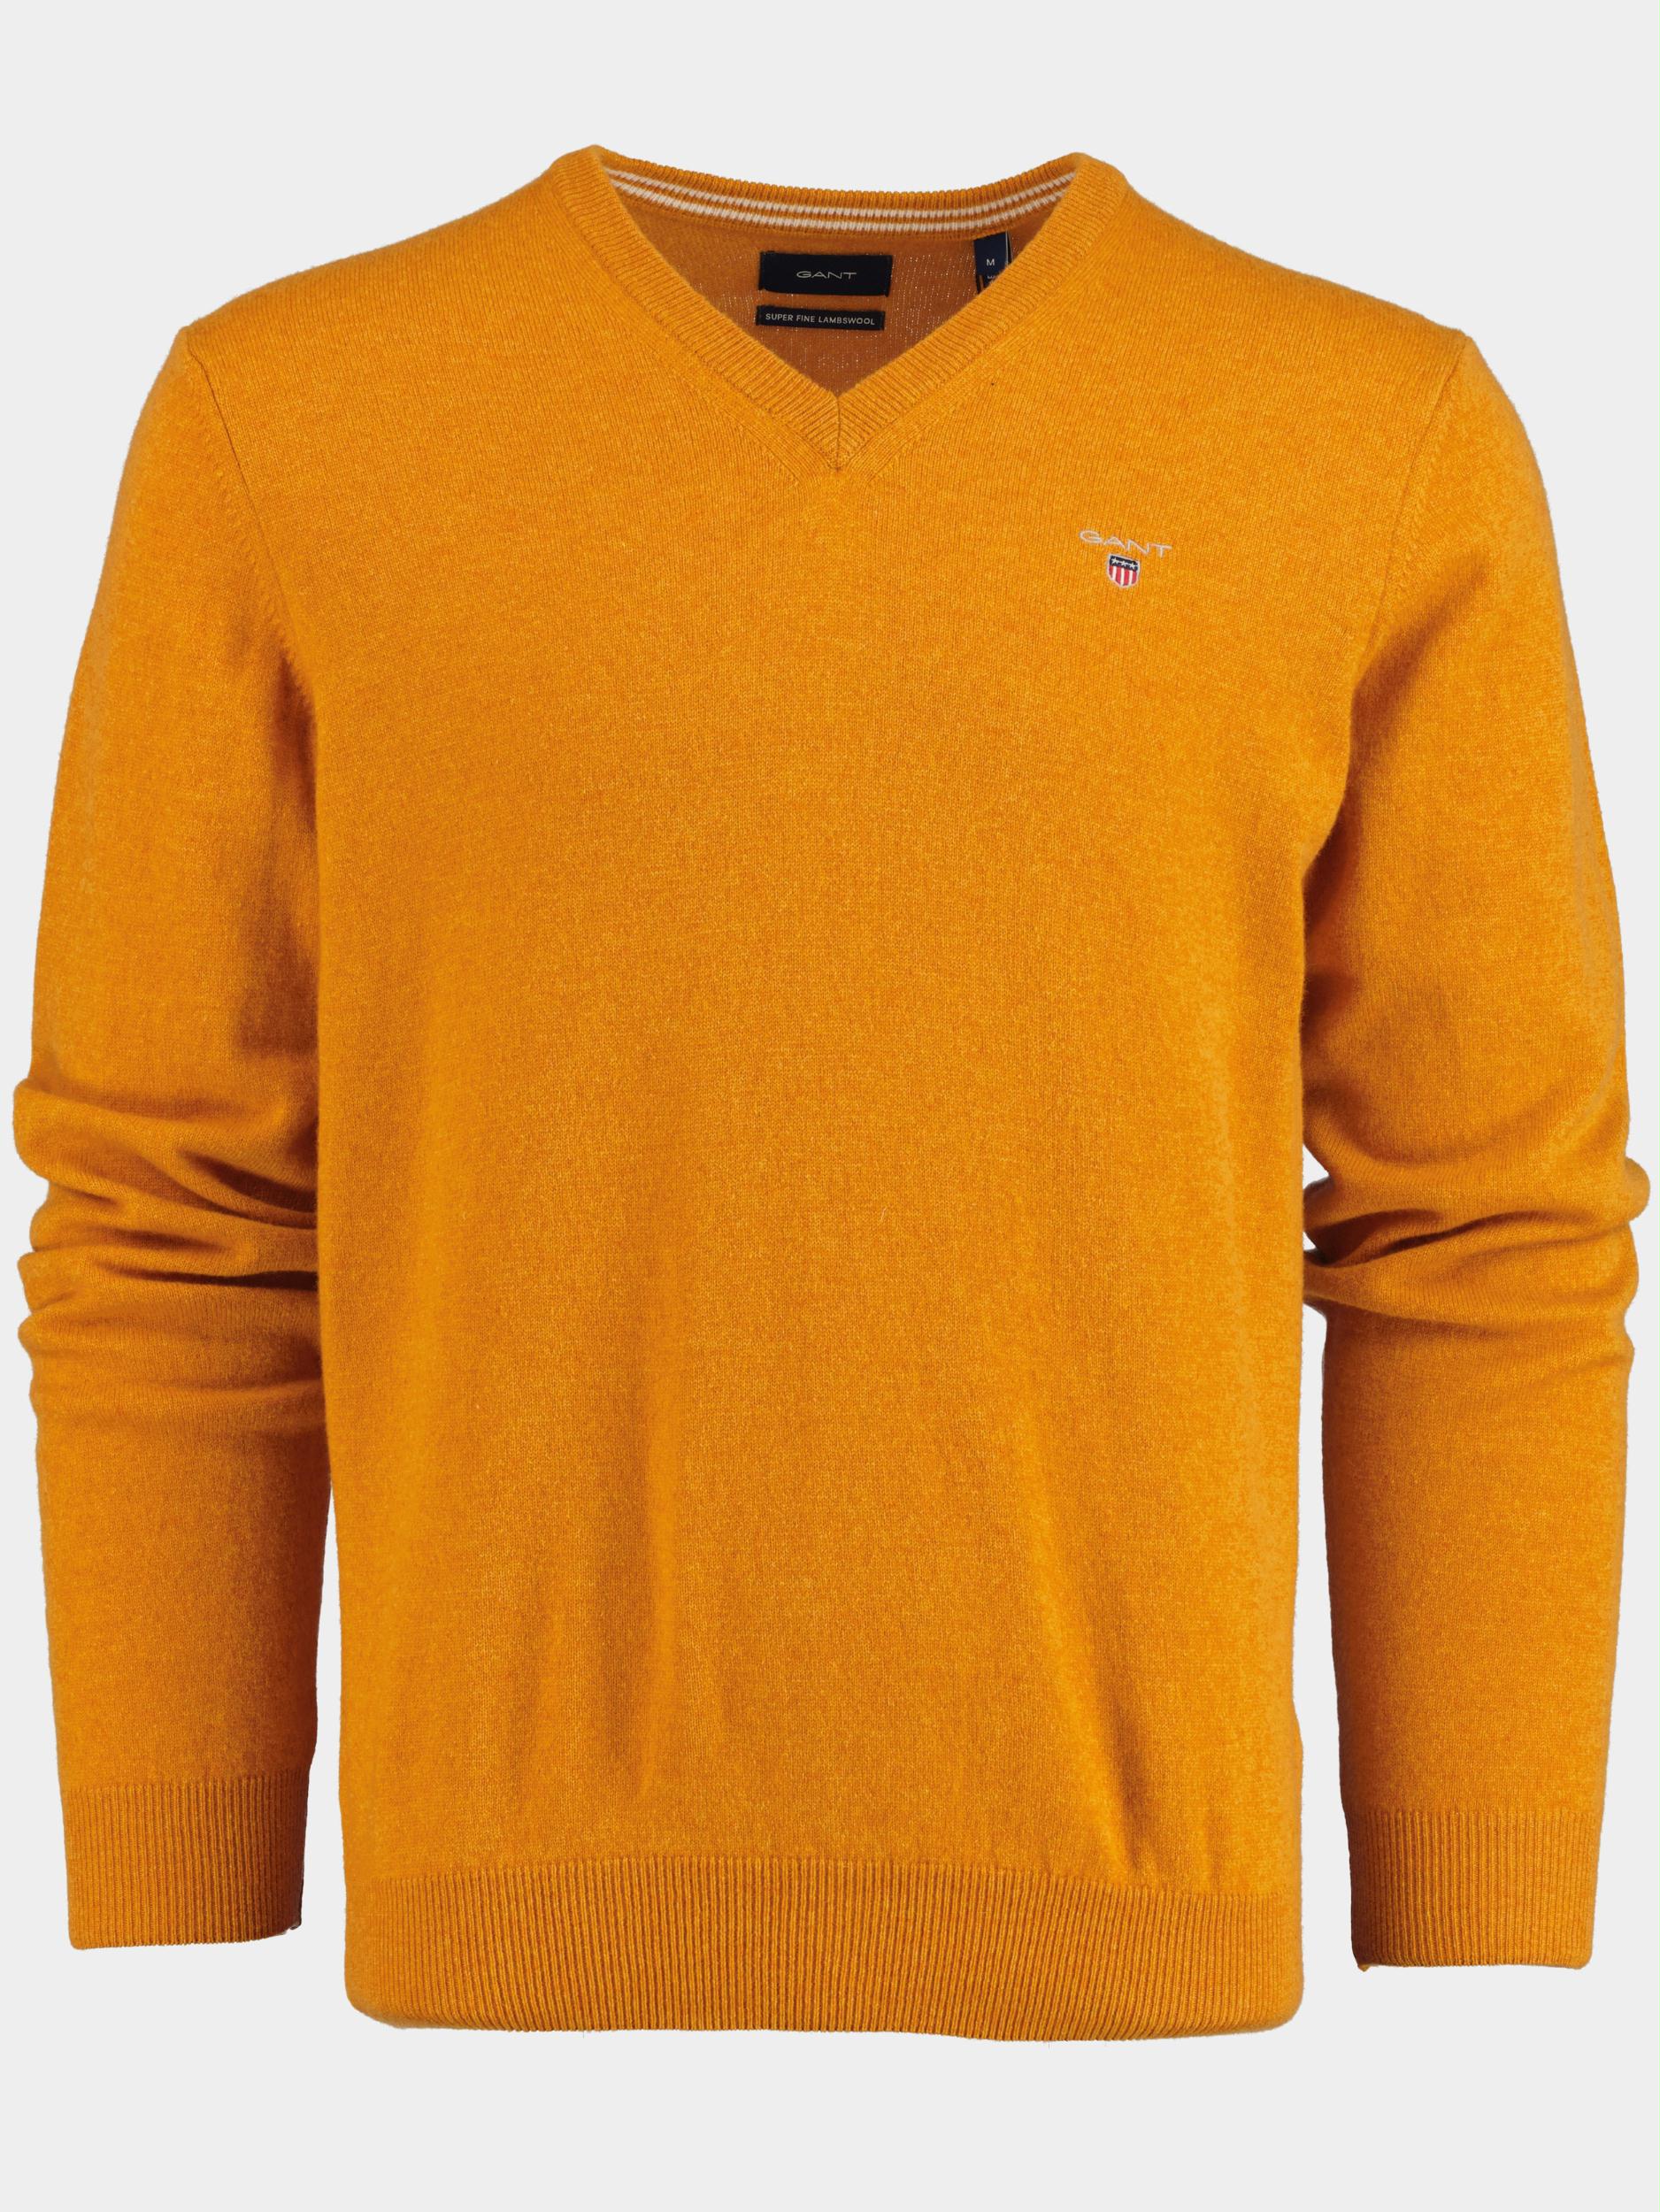 Gant Pullover Oranje Superfine Lambswool V Neck 86212 822